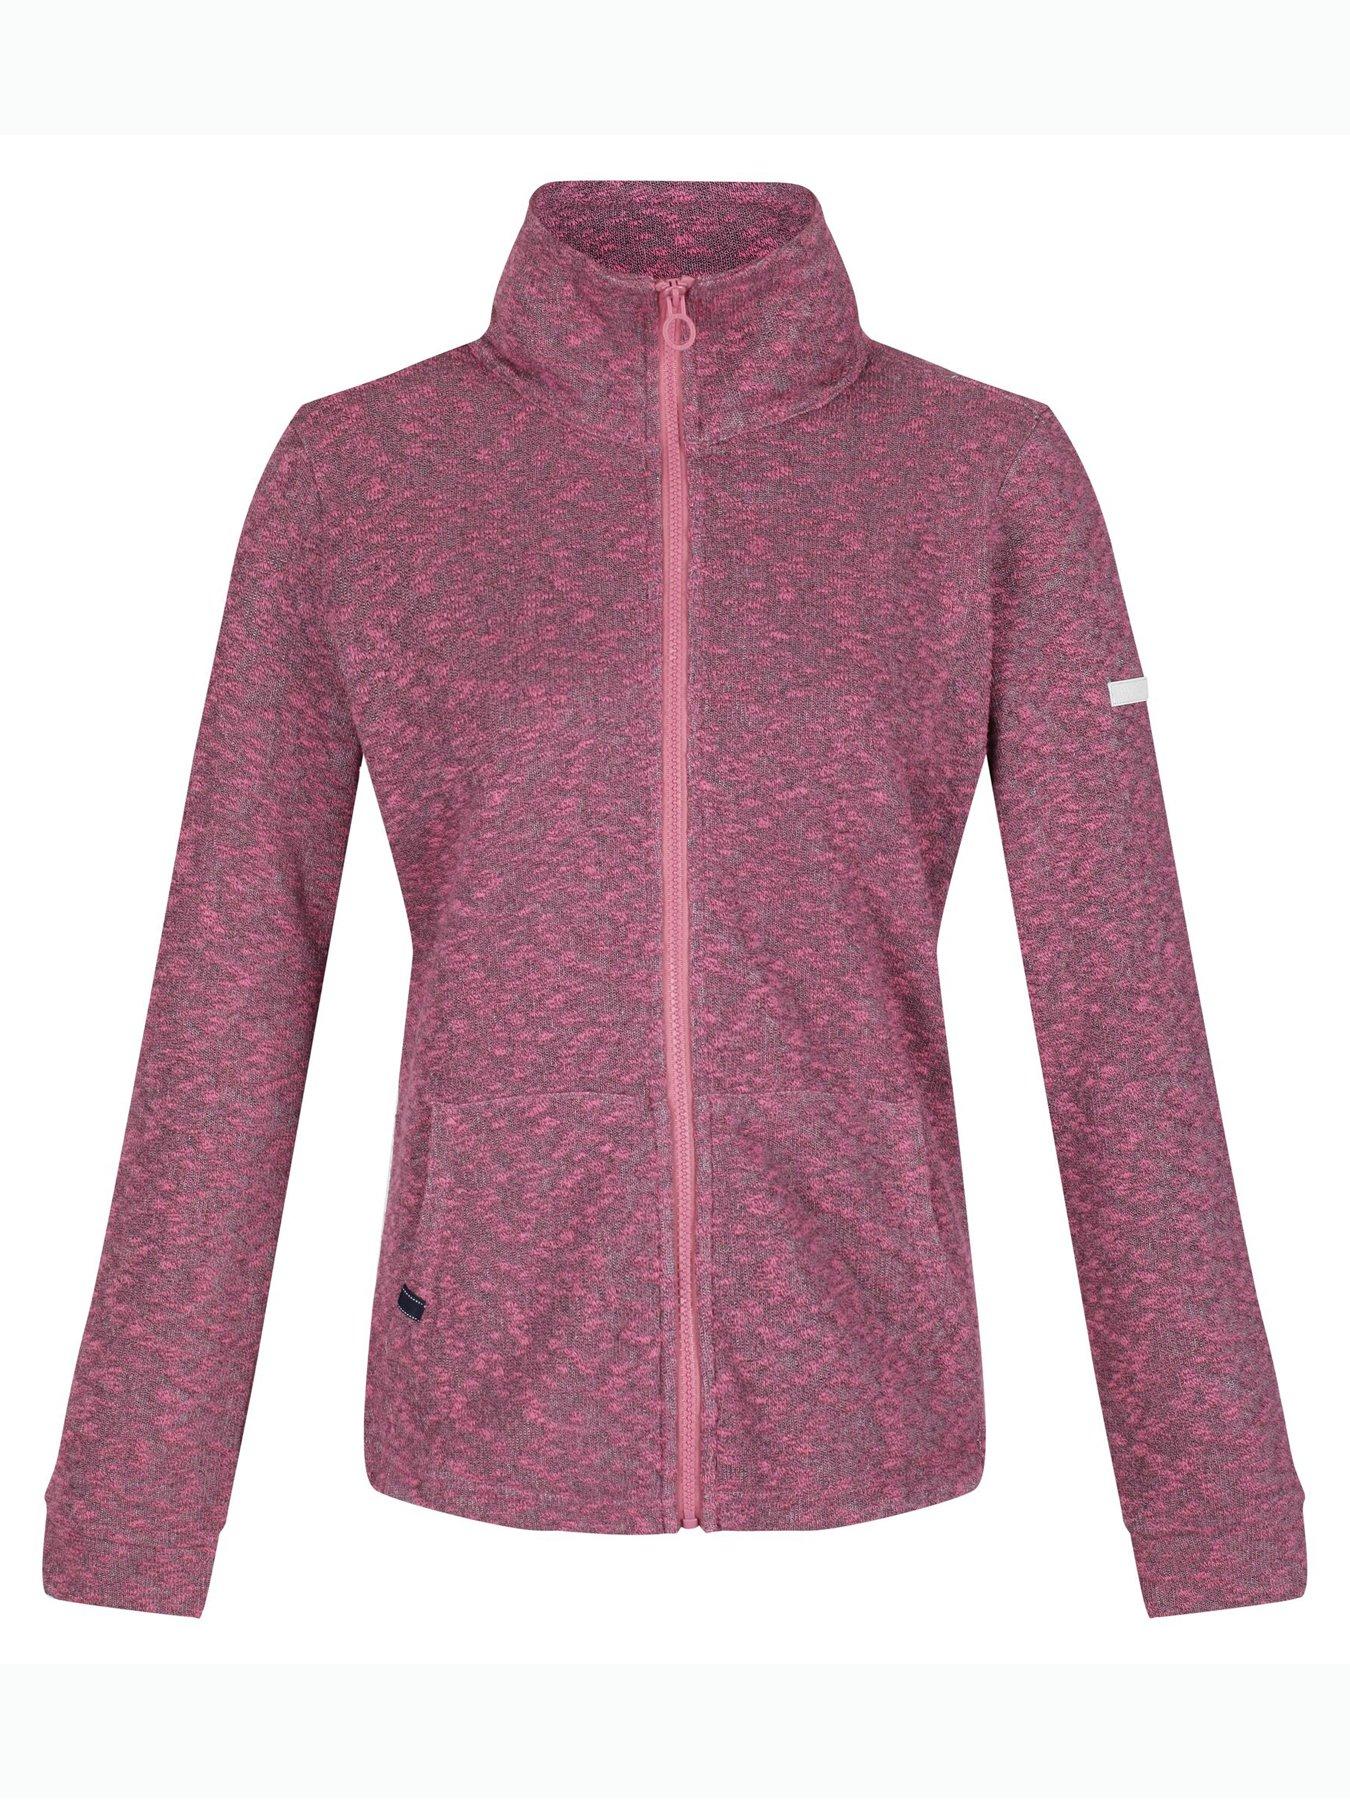 Coats & Jackets Olanna Fleece - Light Pink